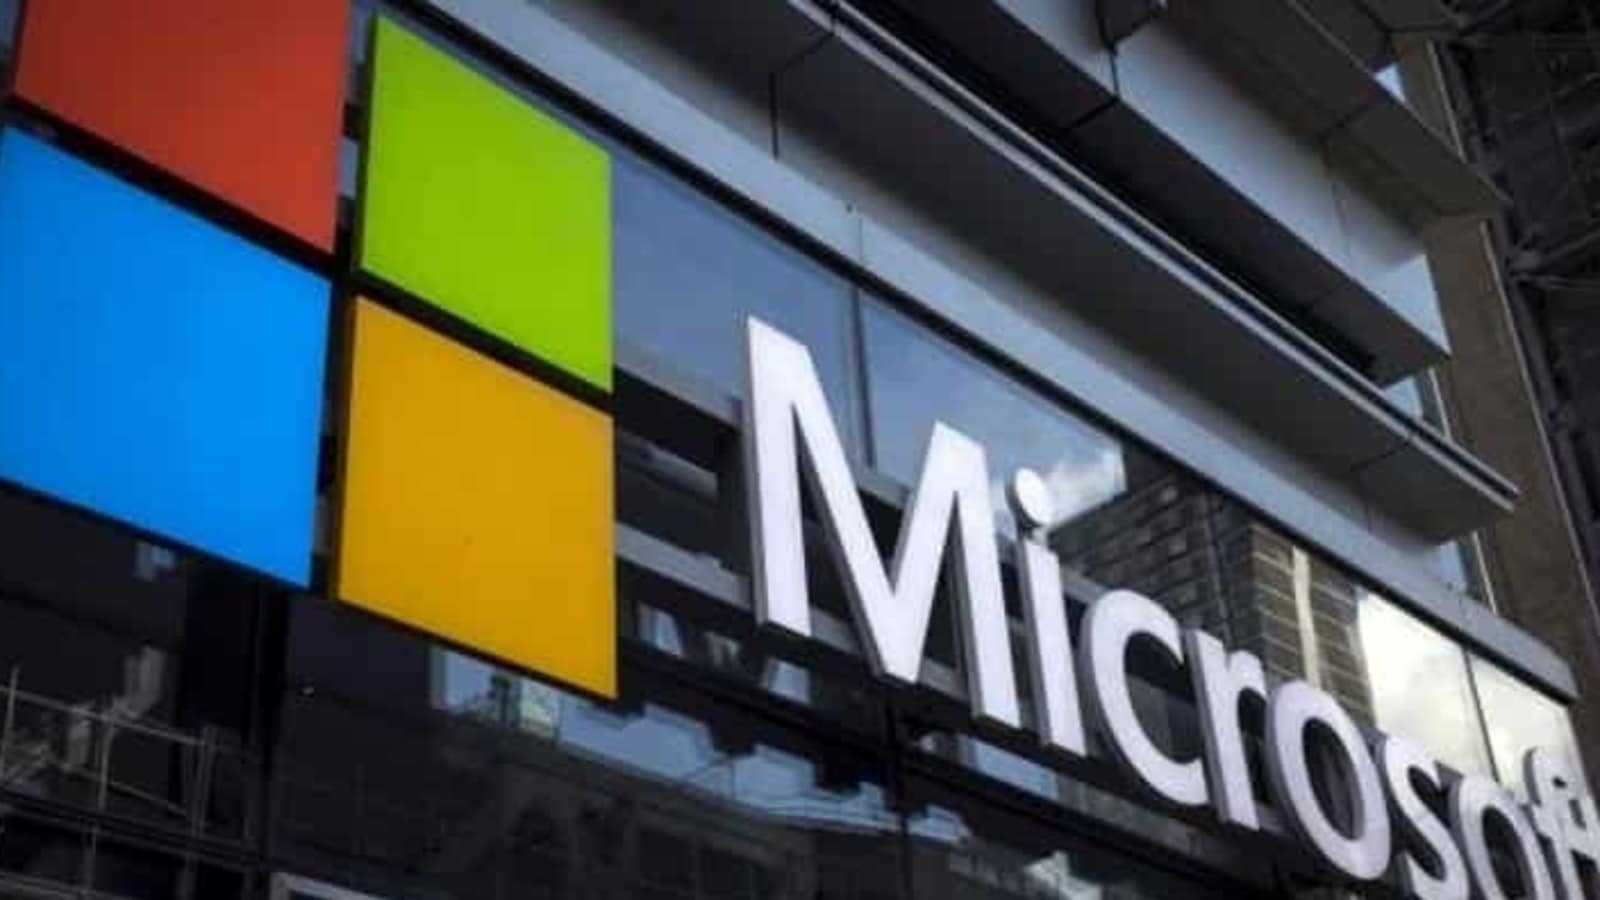 Microsoft estaria negociando comprar o Discord por mais de US$ 10